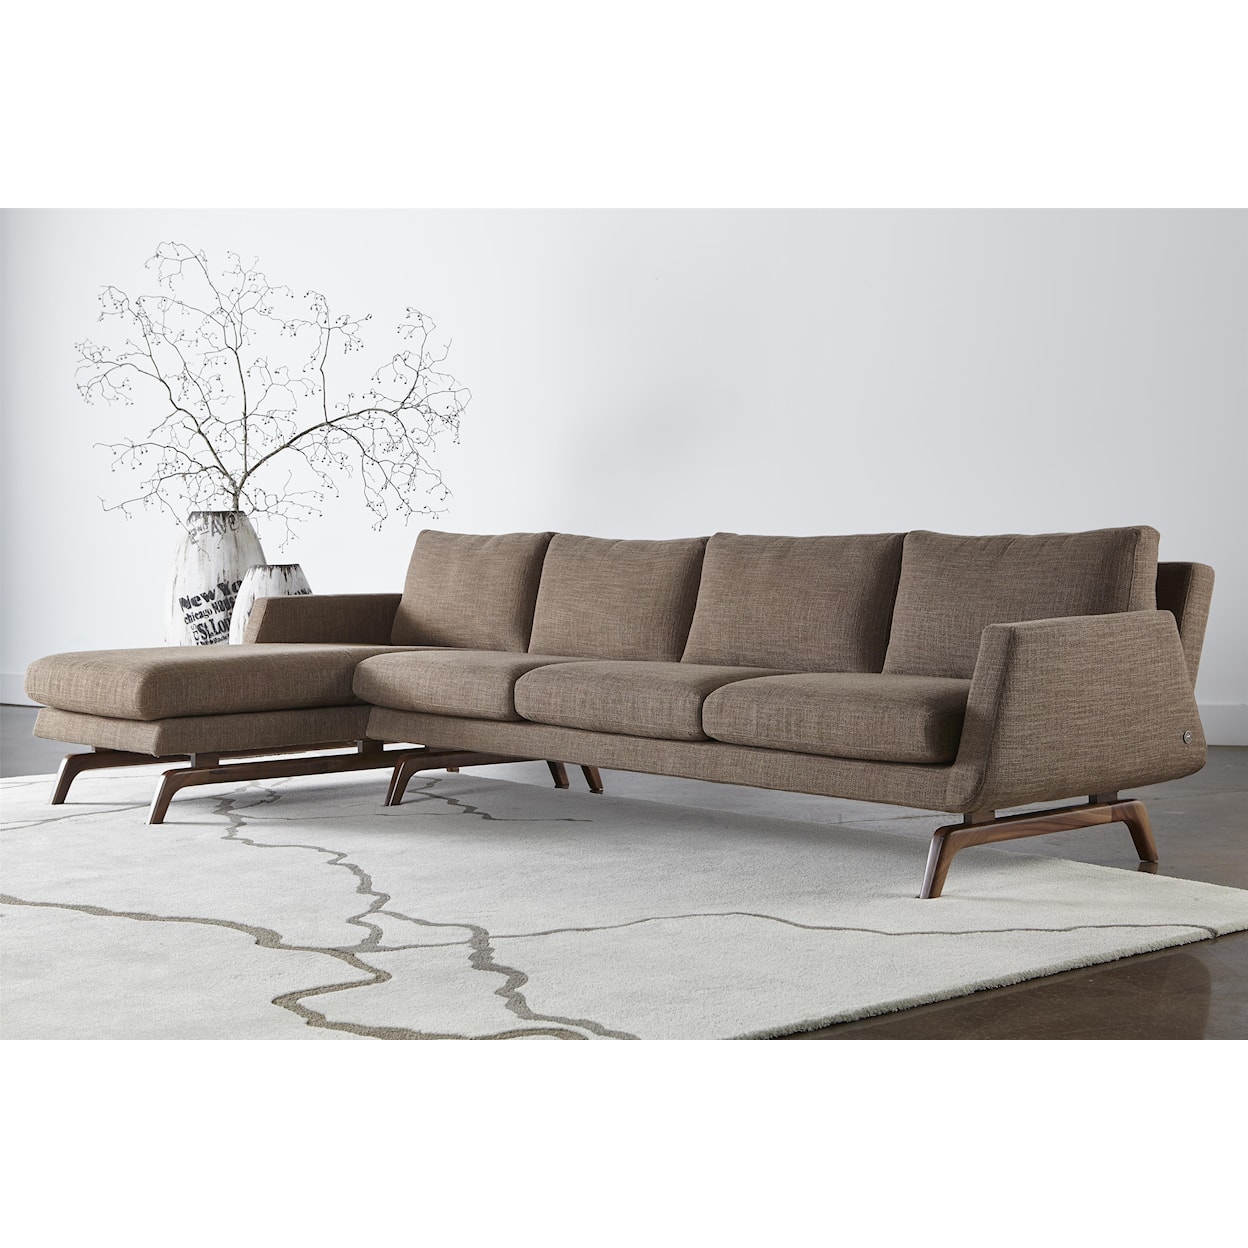 American Leather Nash Sectional Sofa